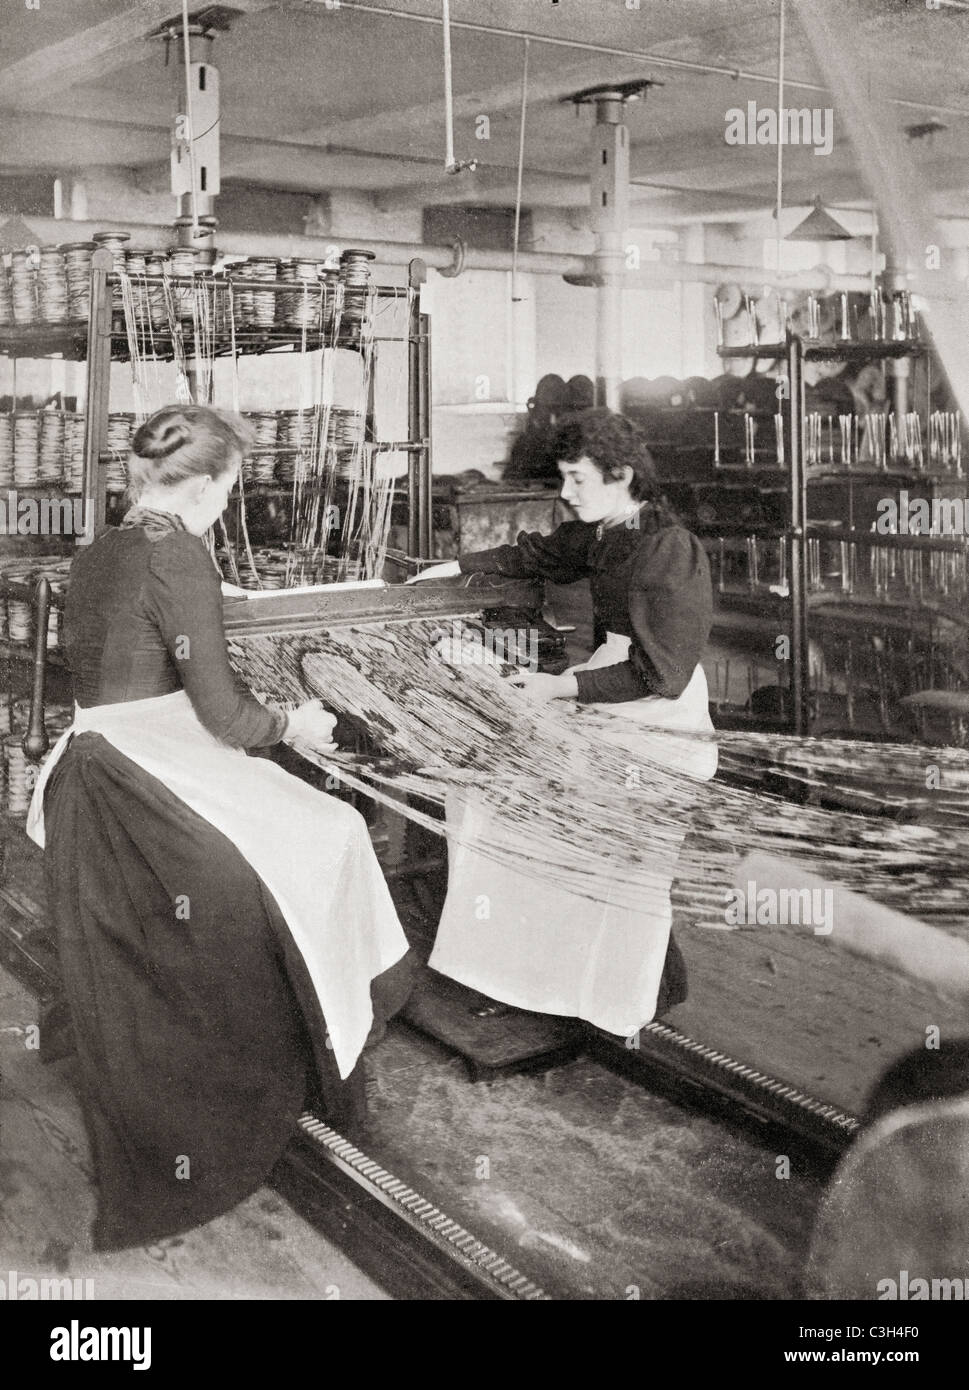 Crossley tappeti di opere di tessitura, Halifax, Yorkshire, Inghilterra nel tardo XIX secolo. Foto Stock